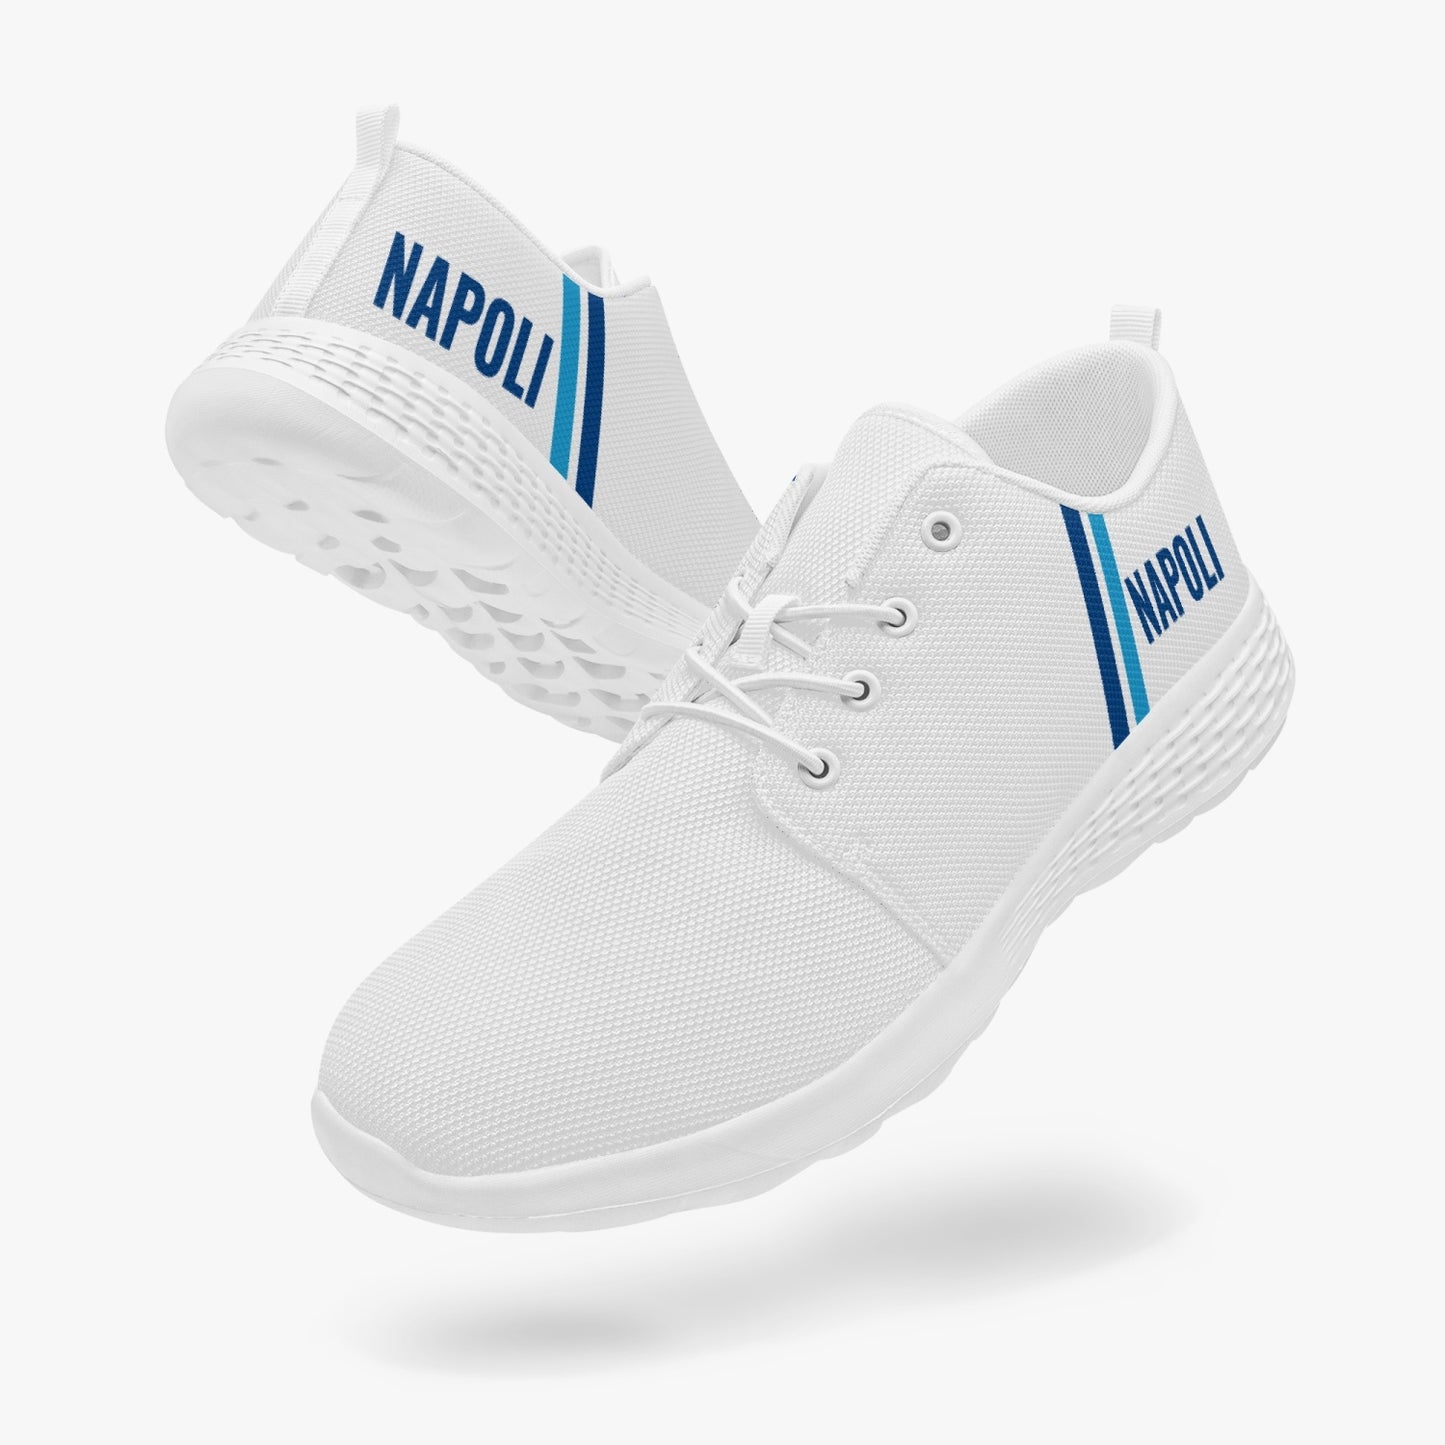 Napoli Running Shoes - men's /women's sizes